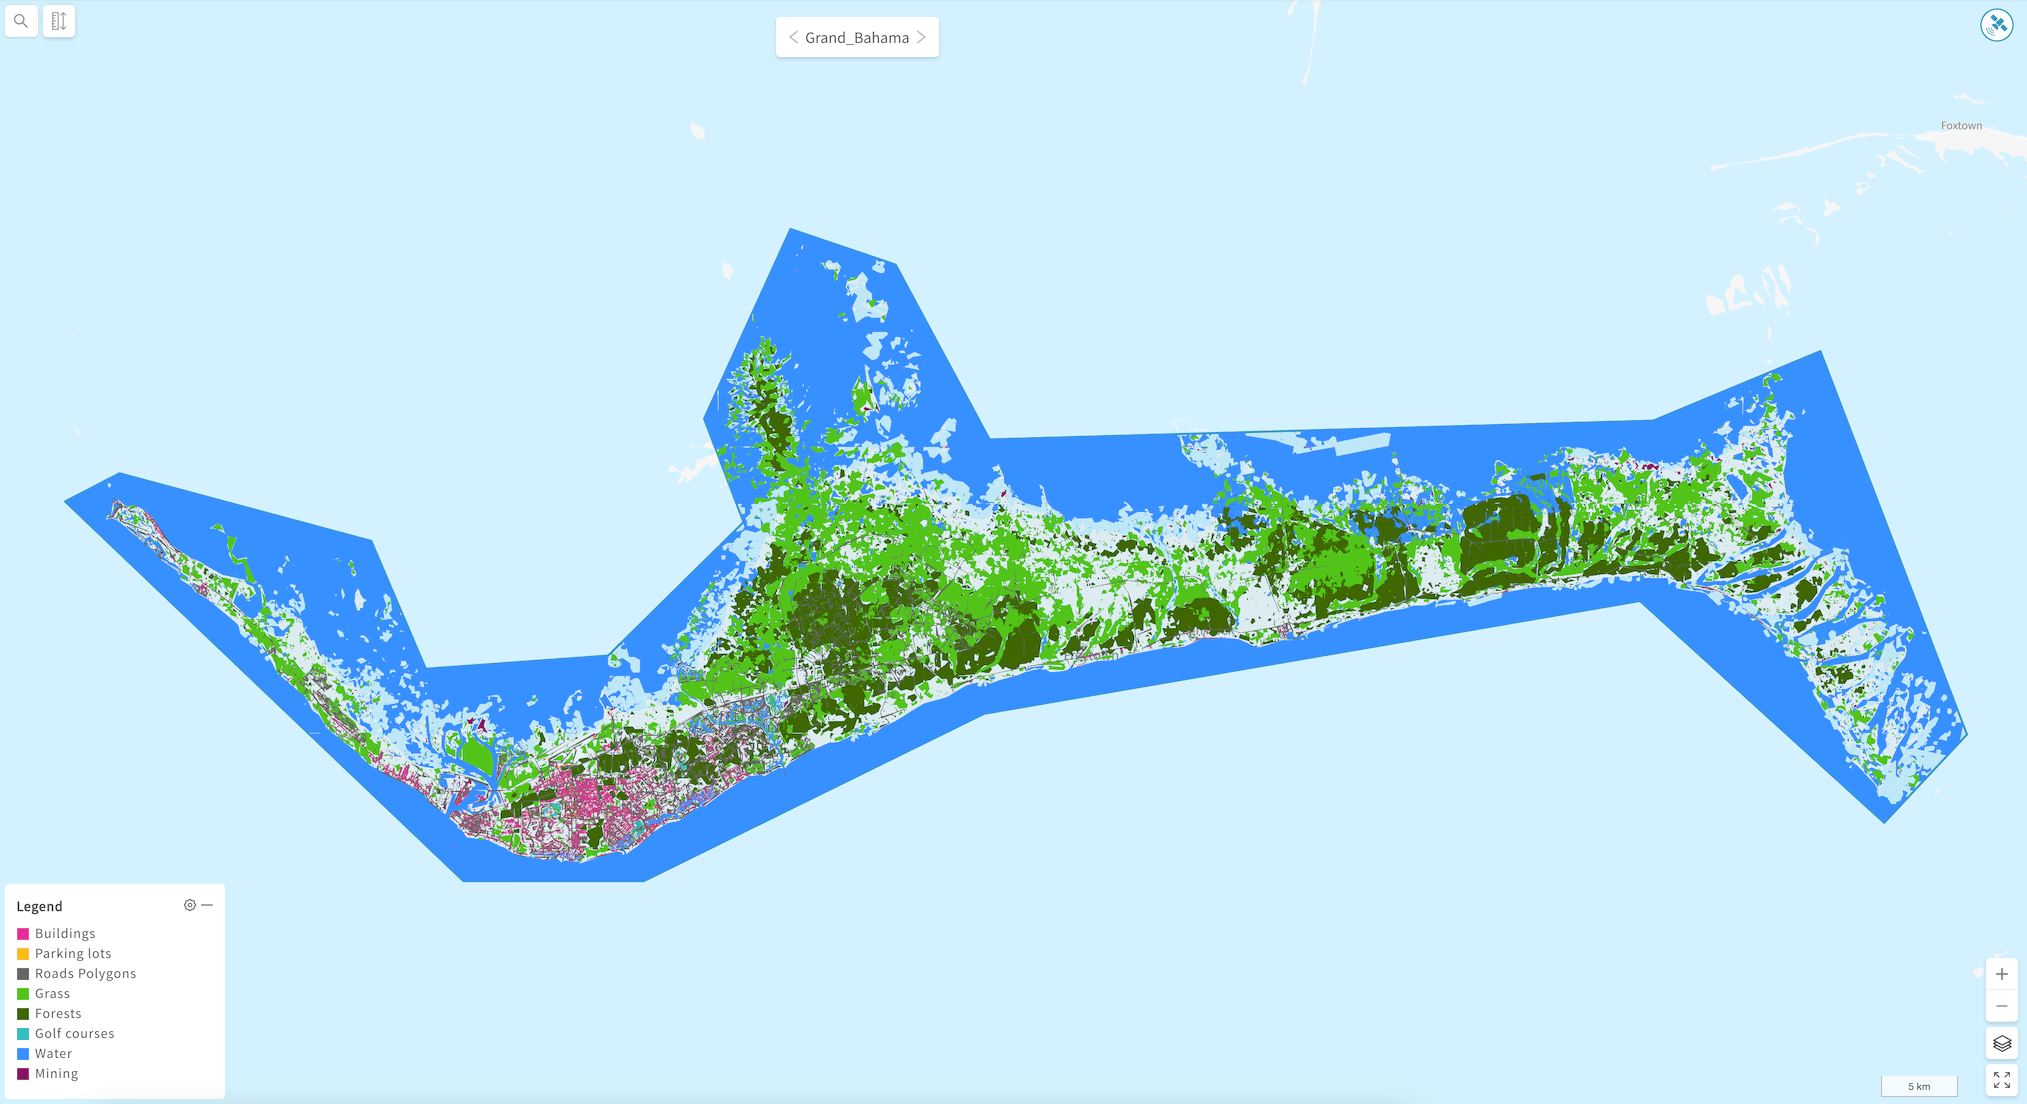 Land Use (3-5m) results - Grand Bahama right before Hurricane Dorian